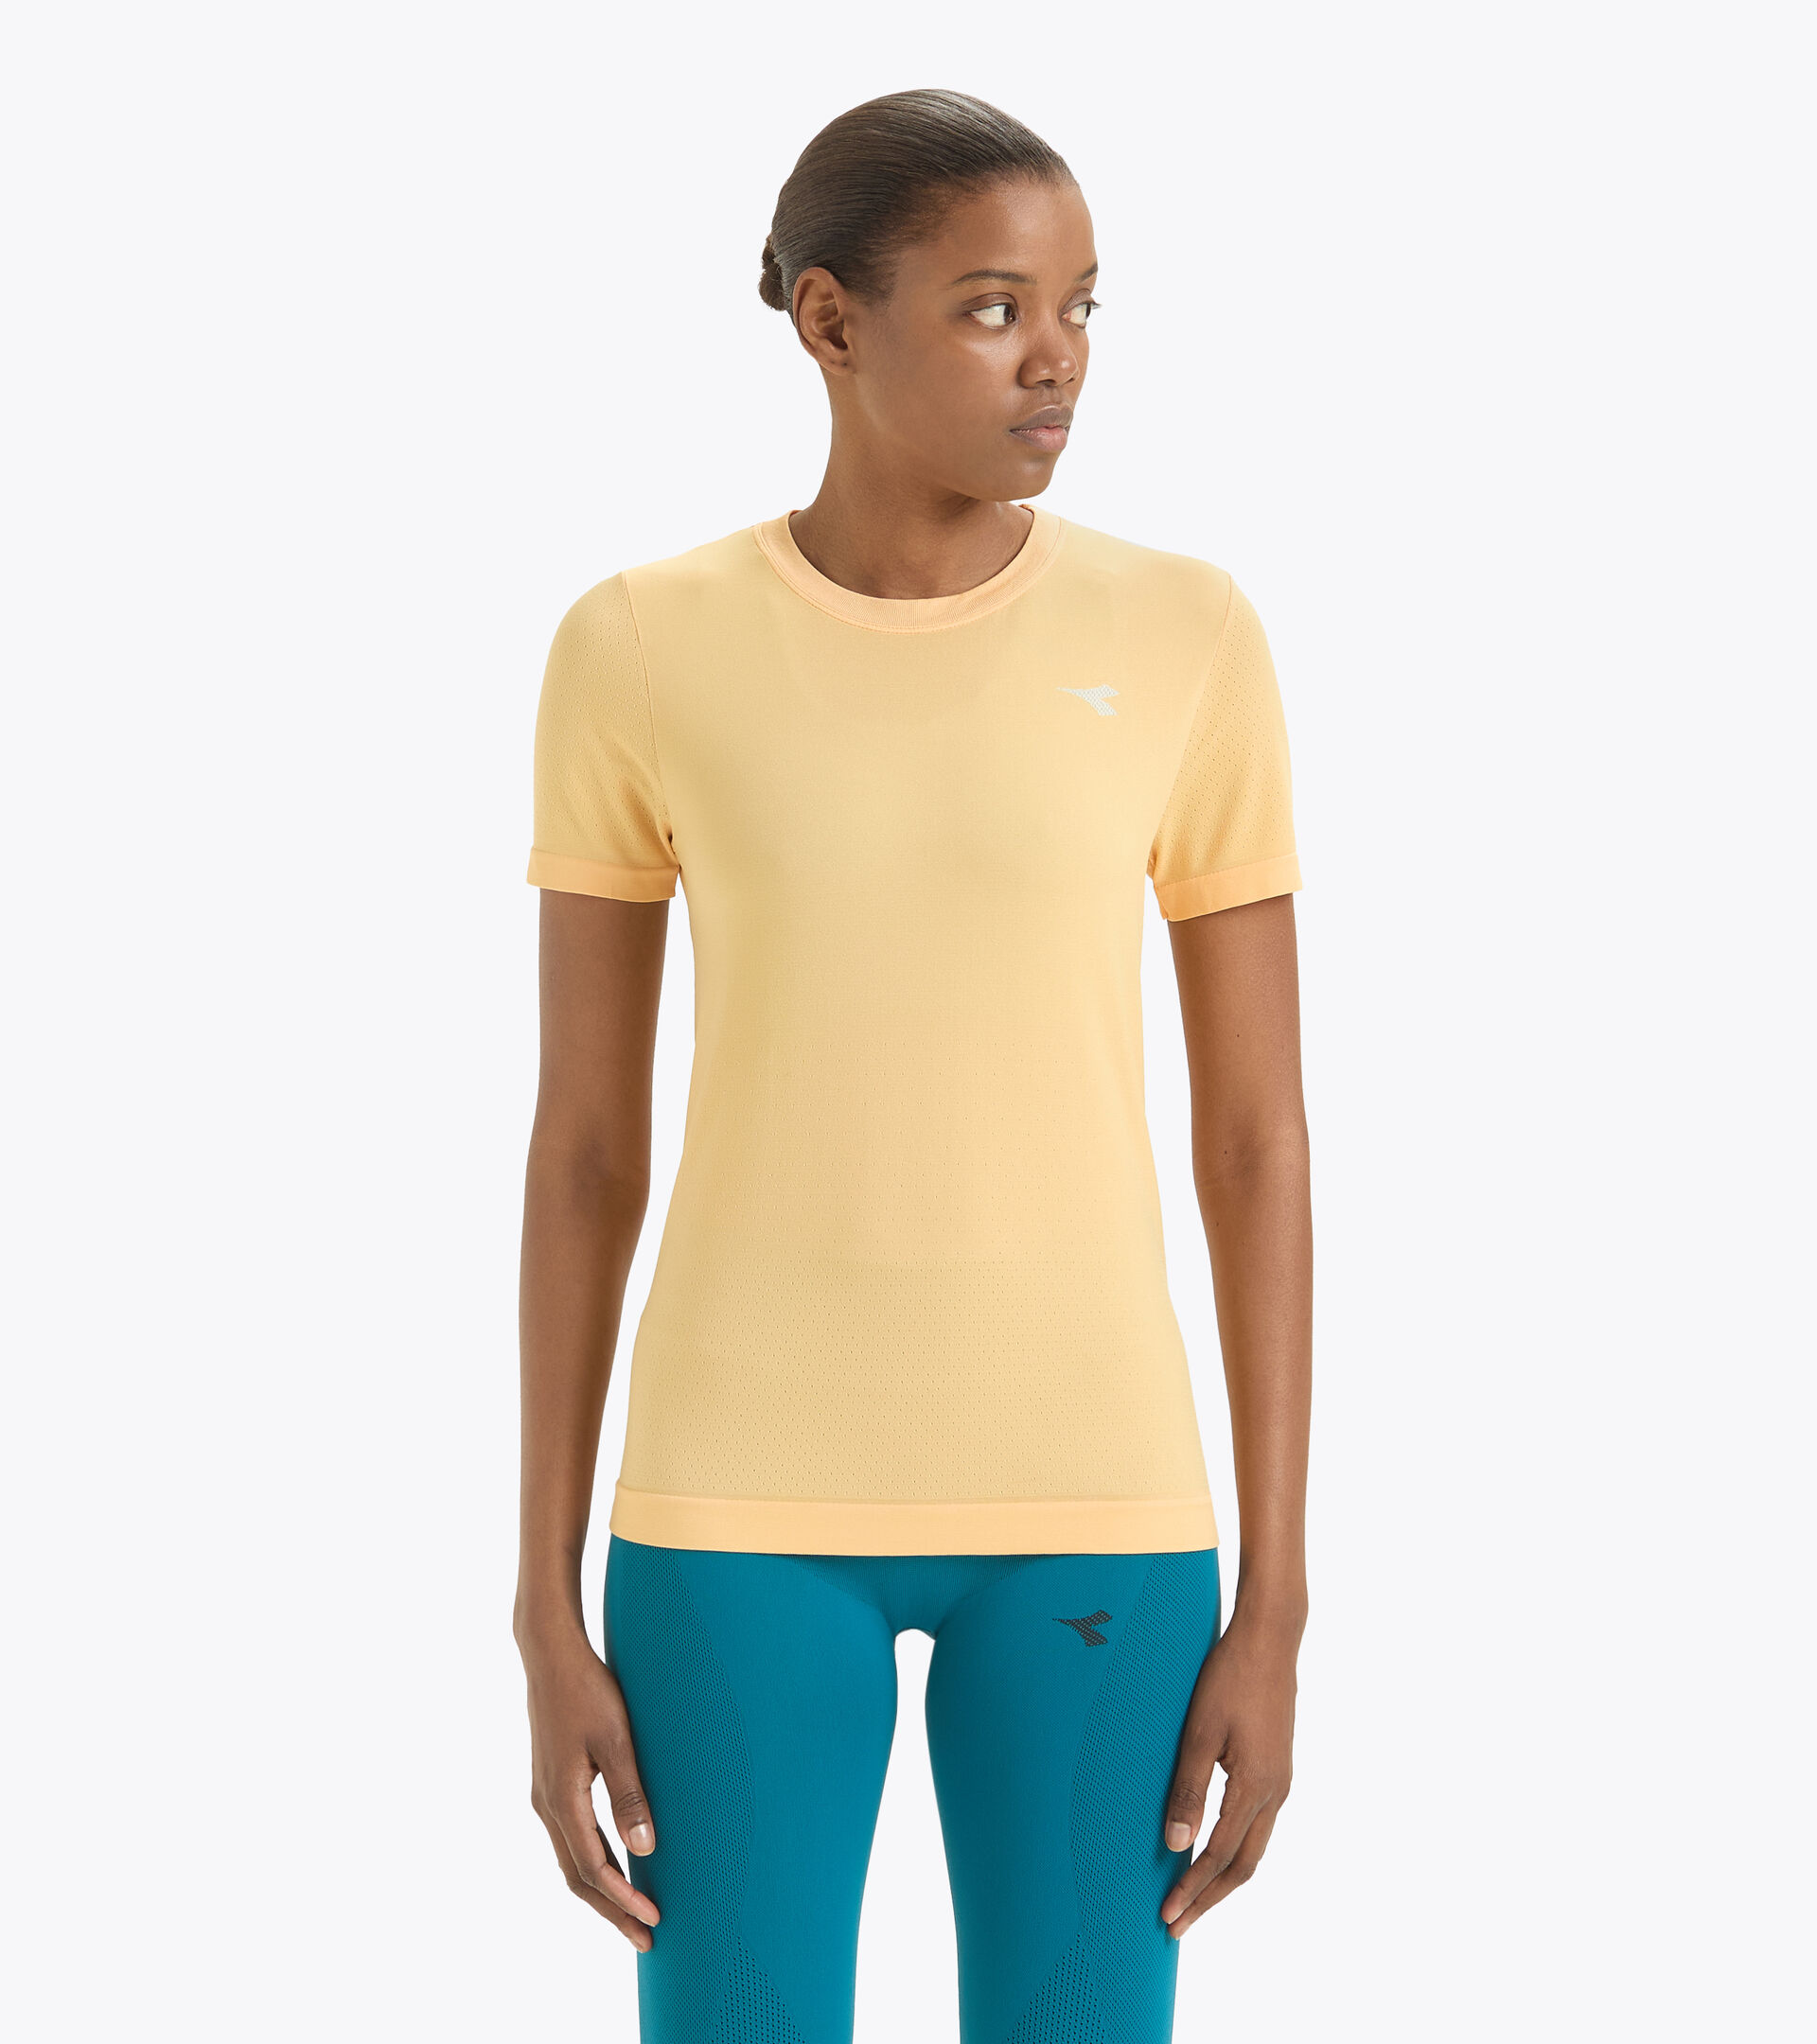 Camiseta de running sin costuras - Made in Italy - Mujer L. SS T-SHIRT SKIN FRIENDLY AMARILLO CALENDULA CLARO - Diadora